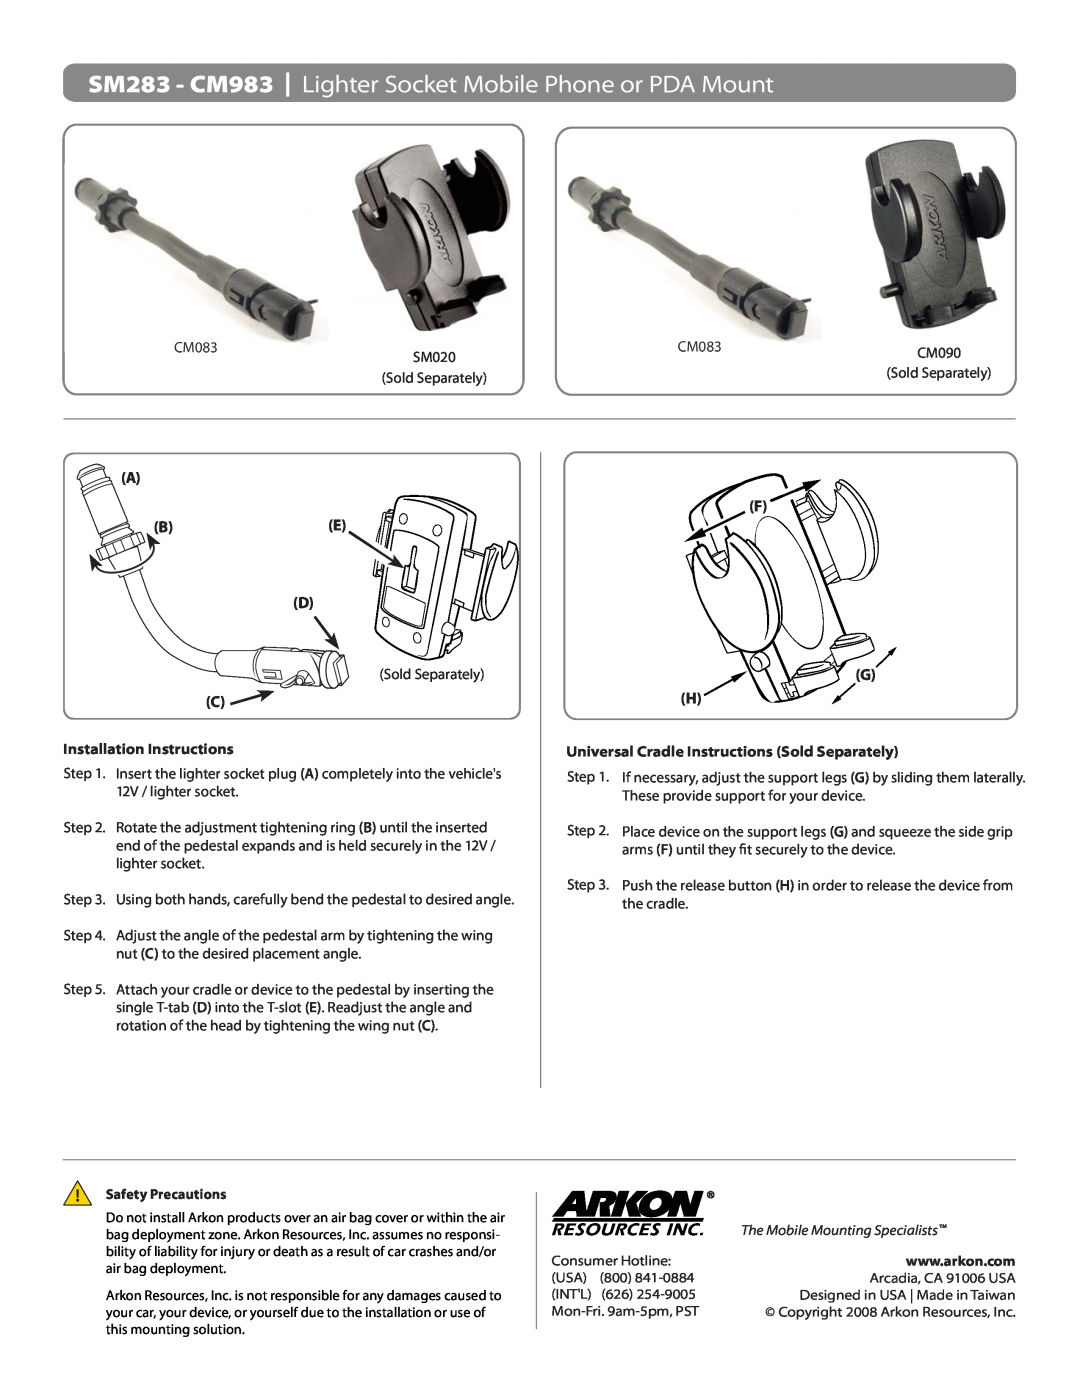 Arkon SM283, CM983 installation instructions A Be D, F G H, Installation Instructions, Safety Precautions 